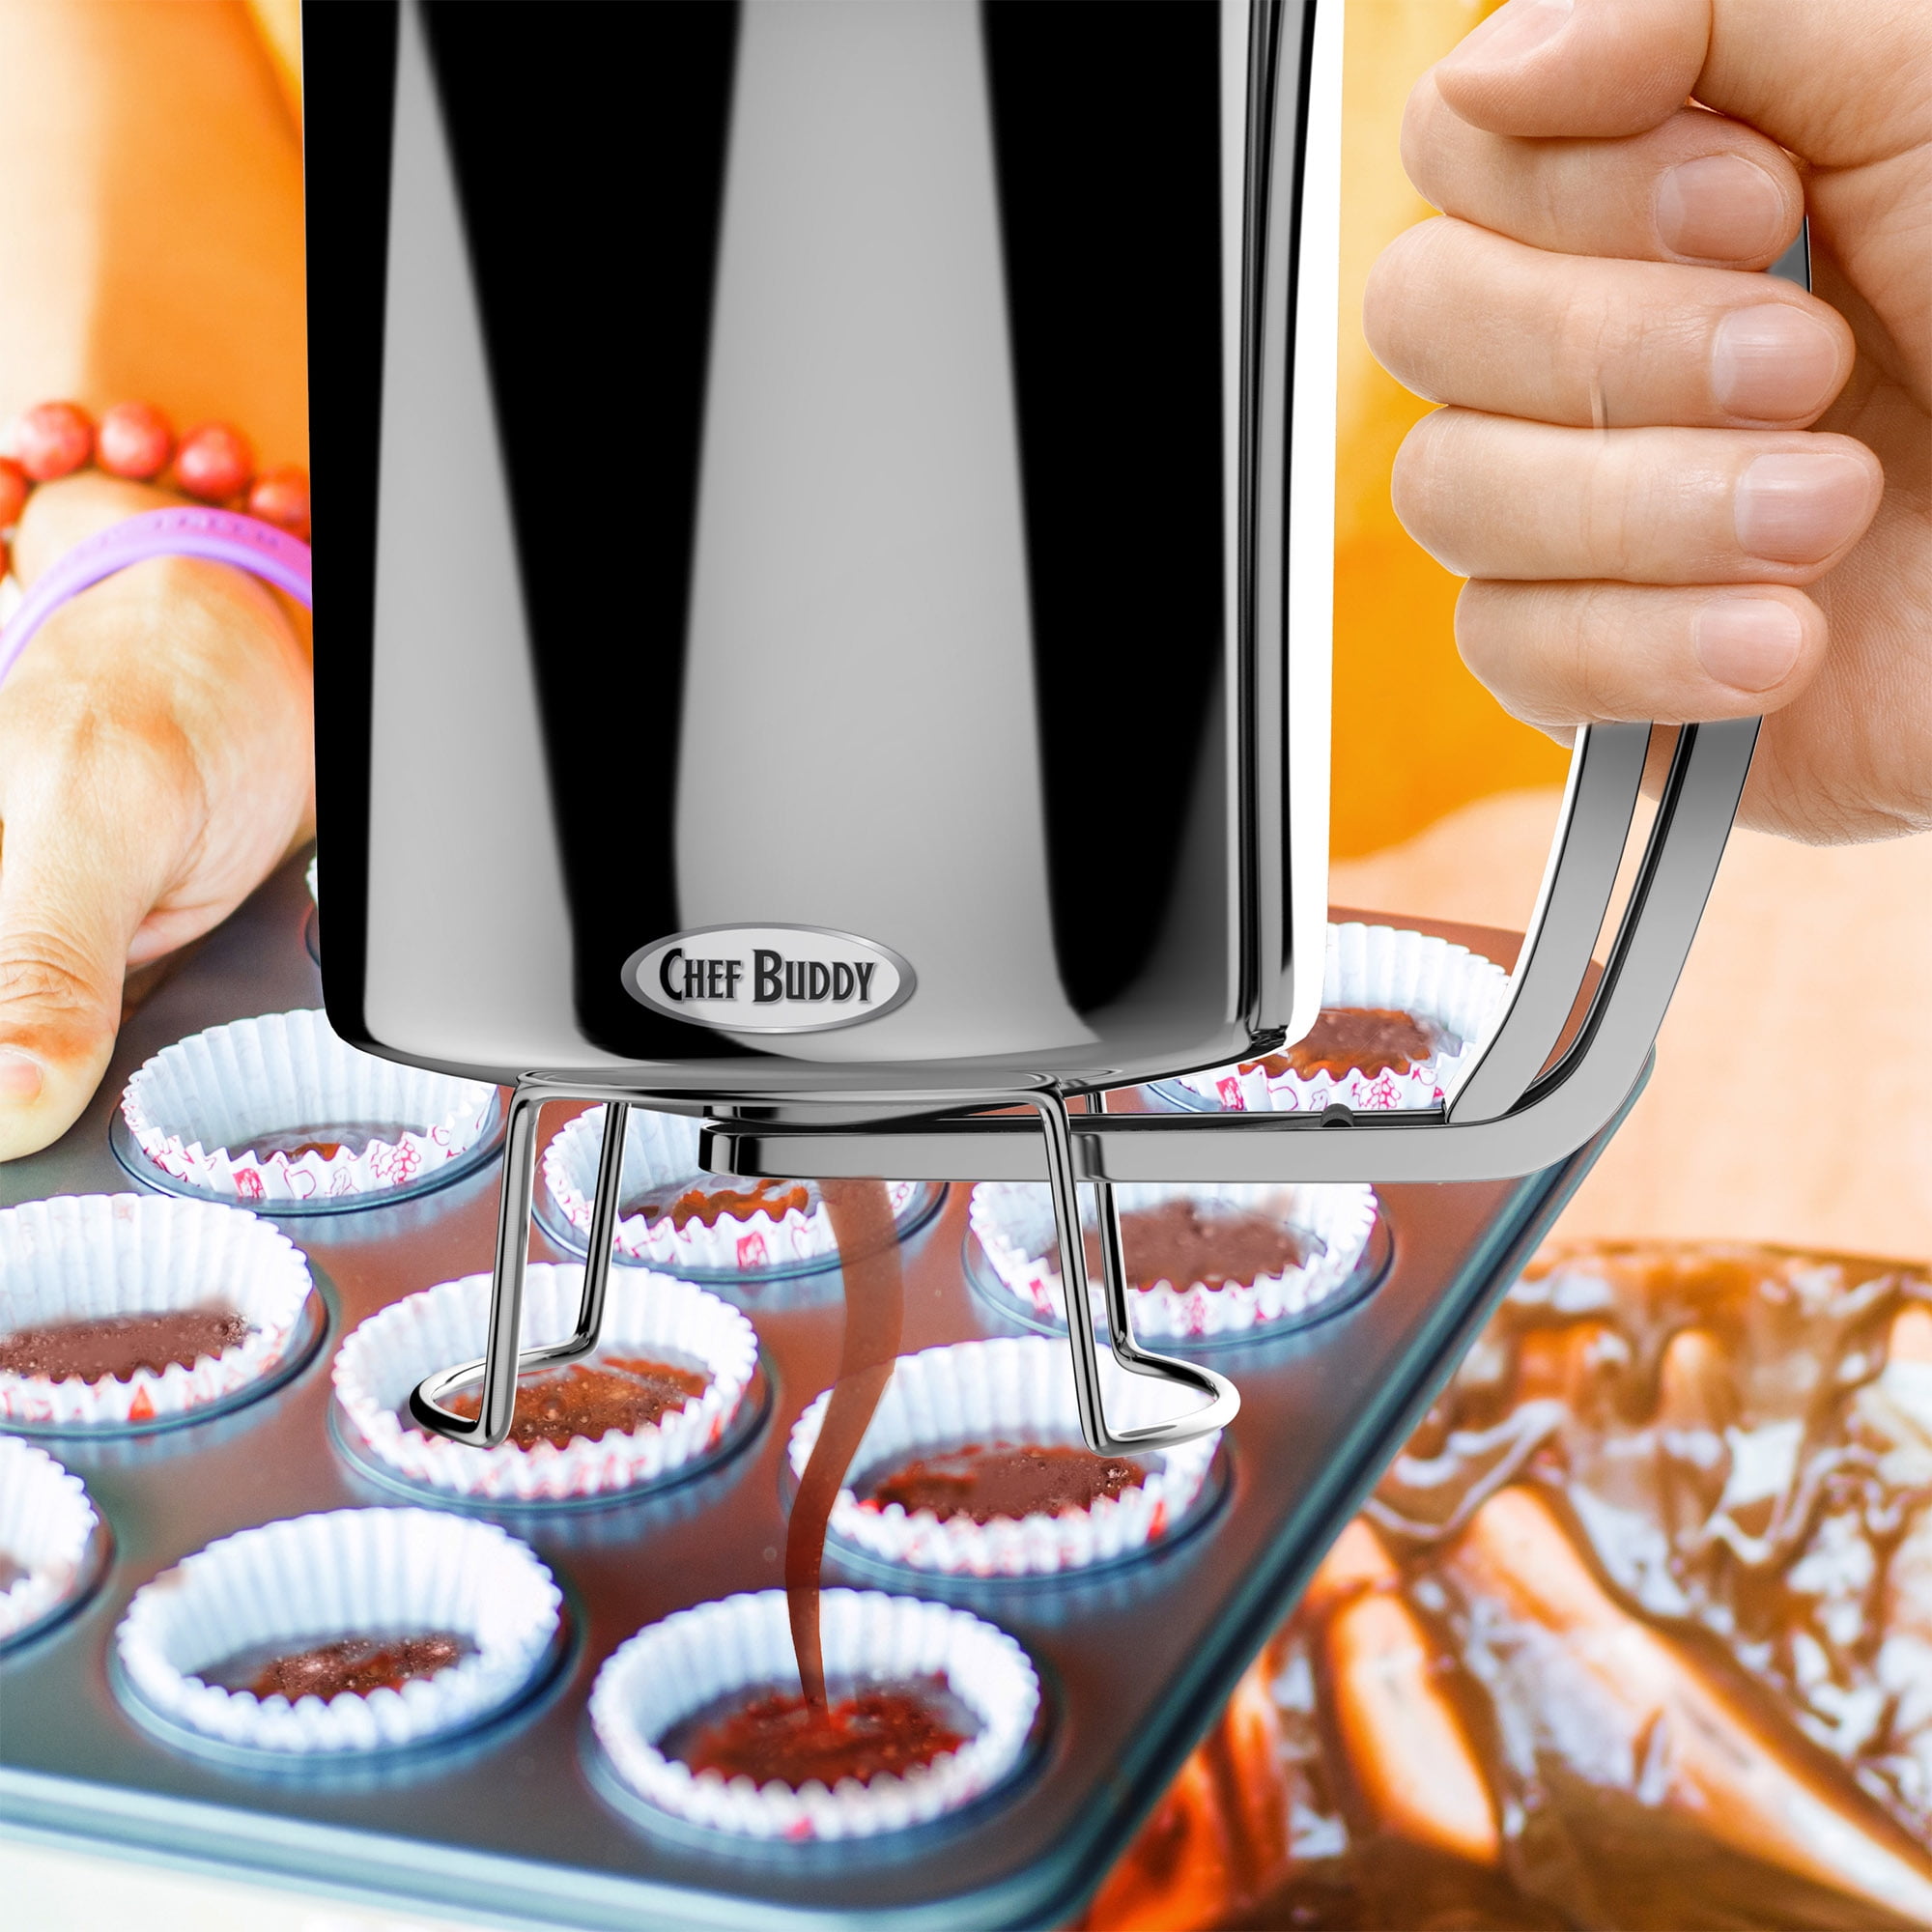 Pancake Batter Dispenser. Perfect for Cupcakes & Waffles